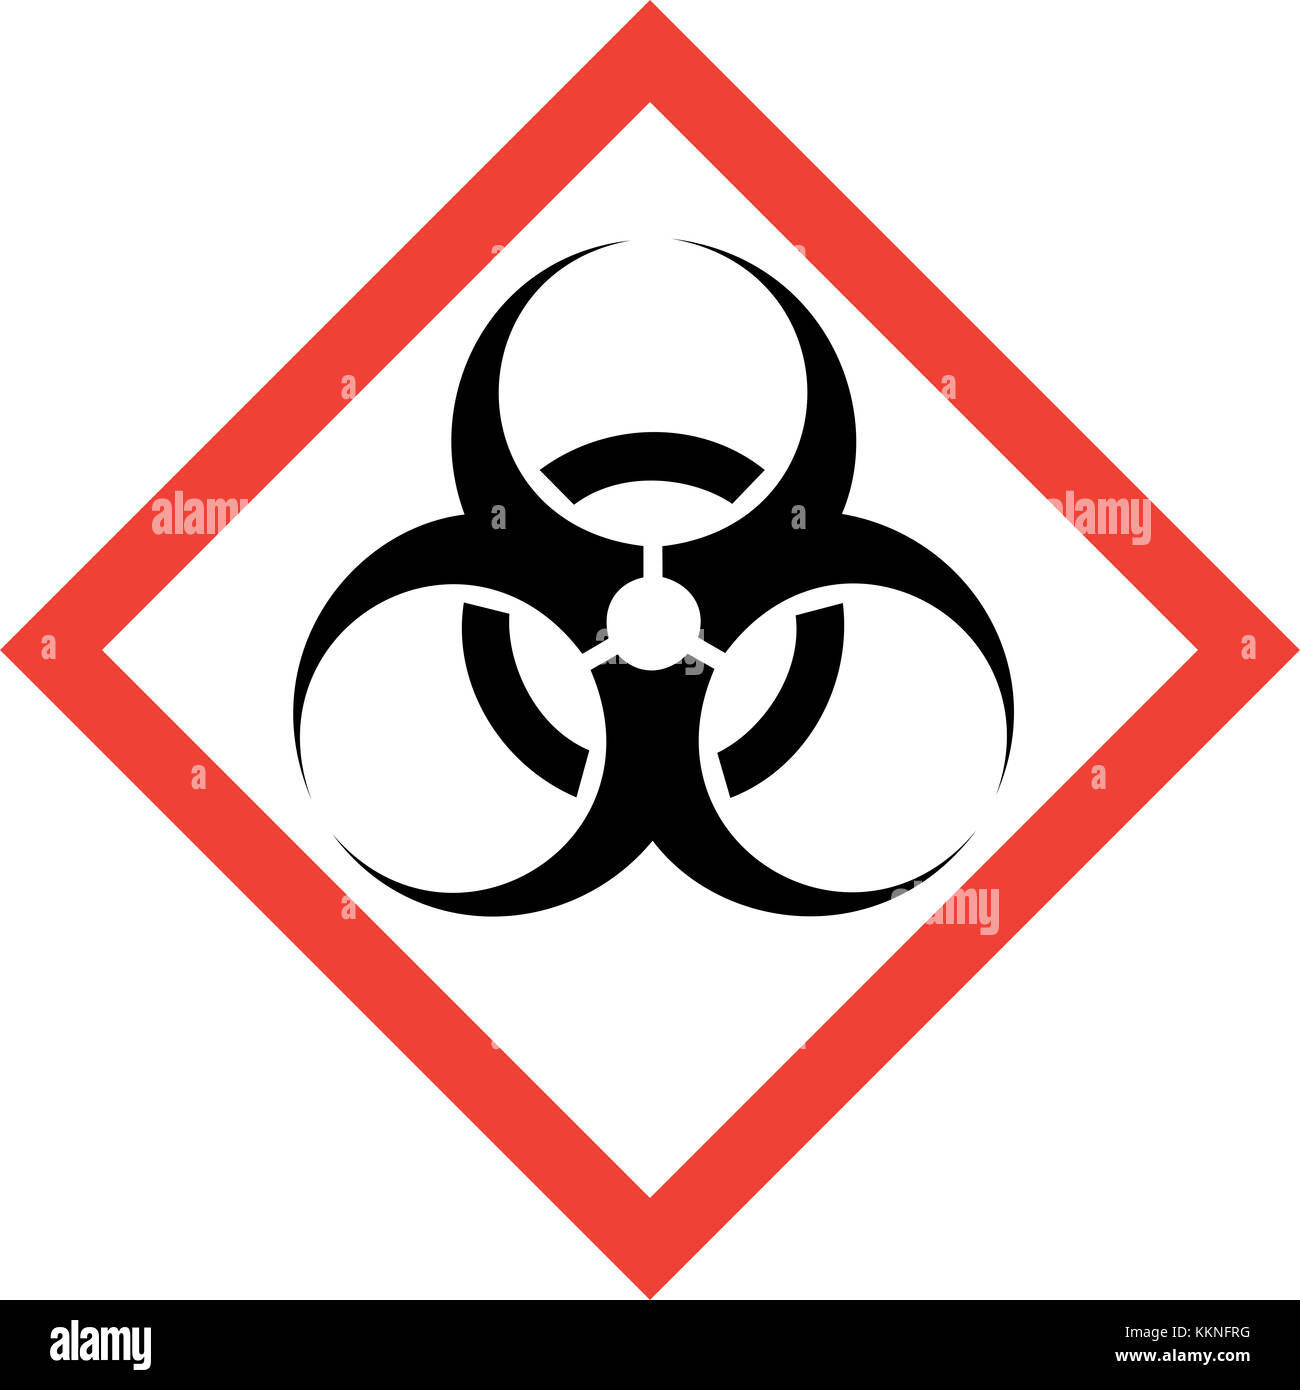 Hazard sign with biohazard substances symbol Stock Photo